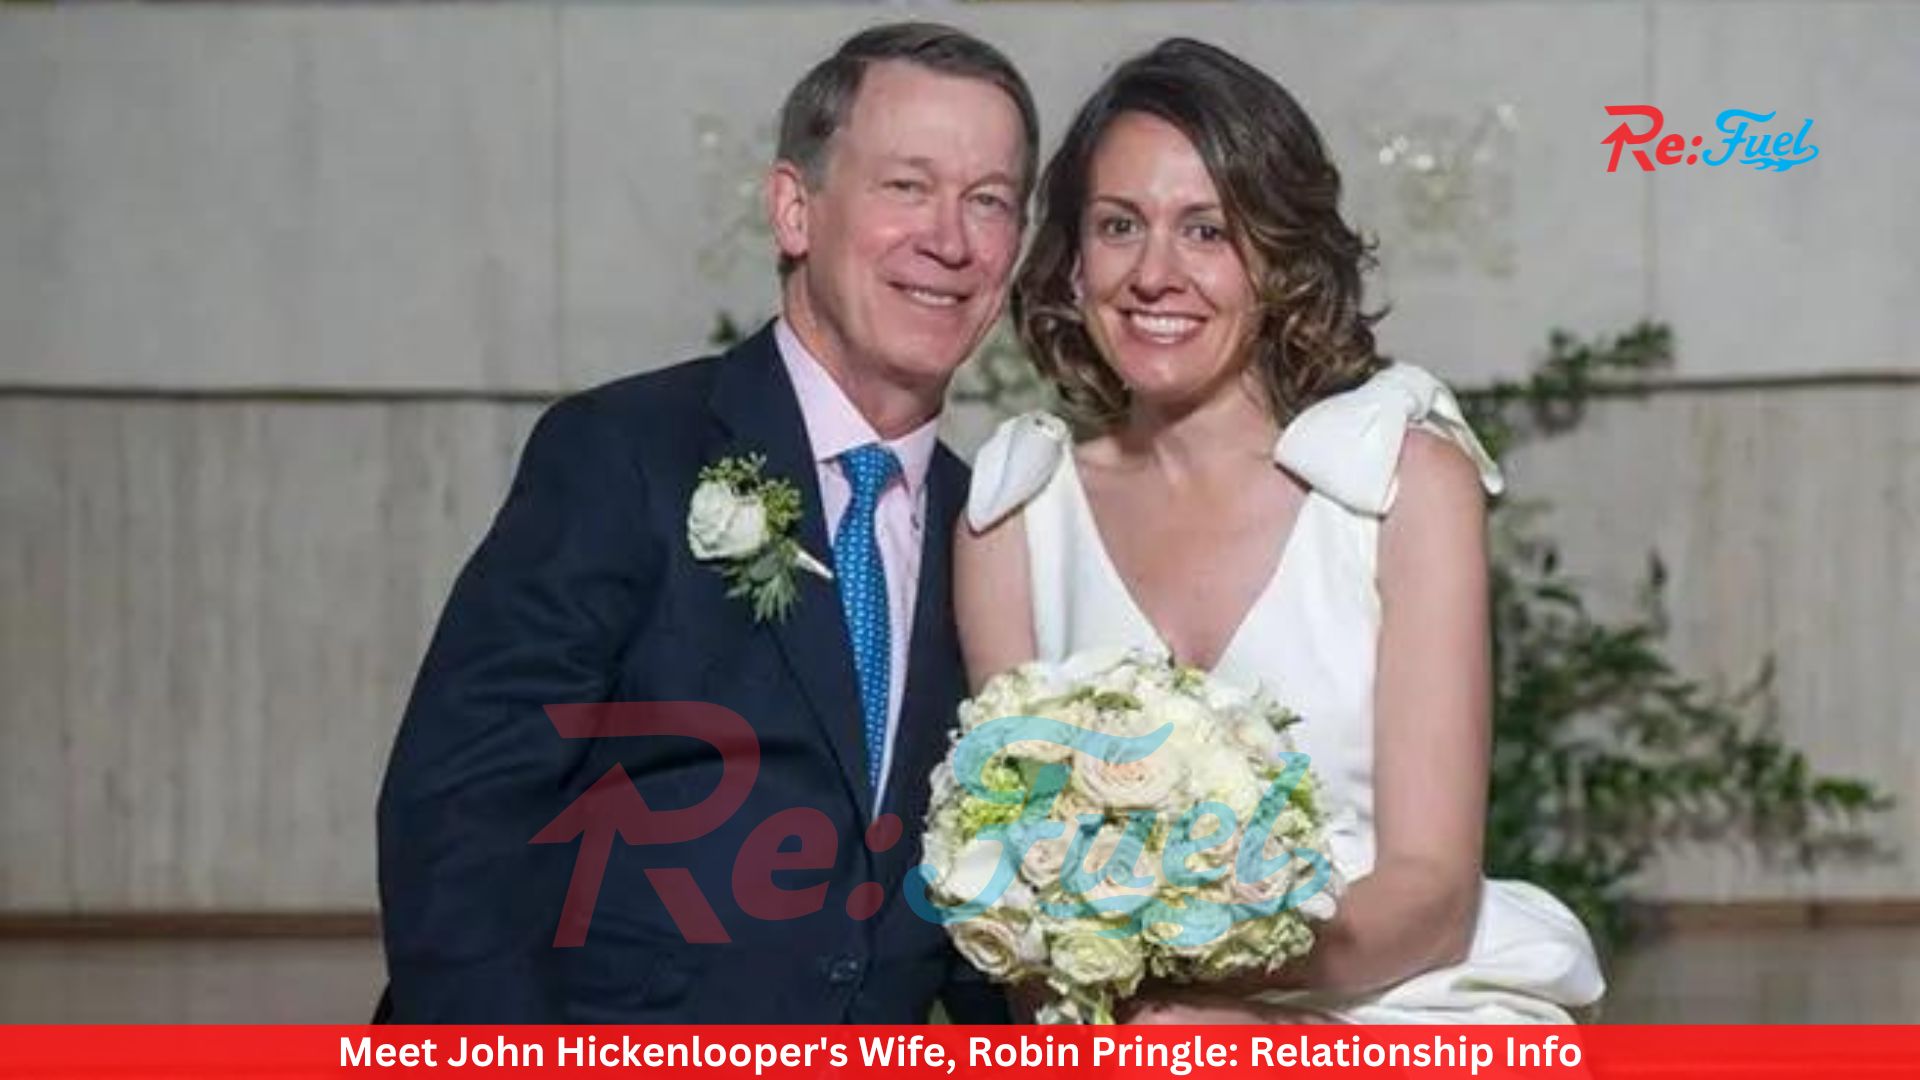 Meet John Hickenlooper's Wife, Robin Pringle: Relationship Info